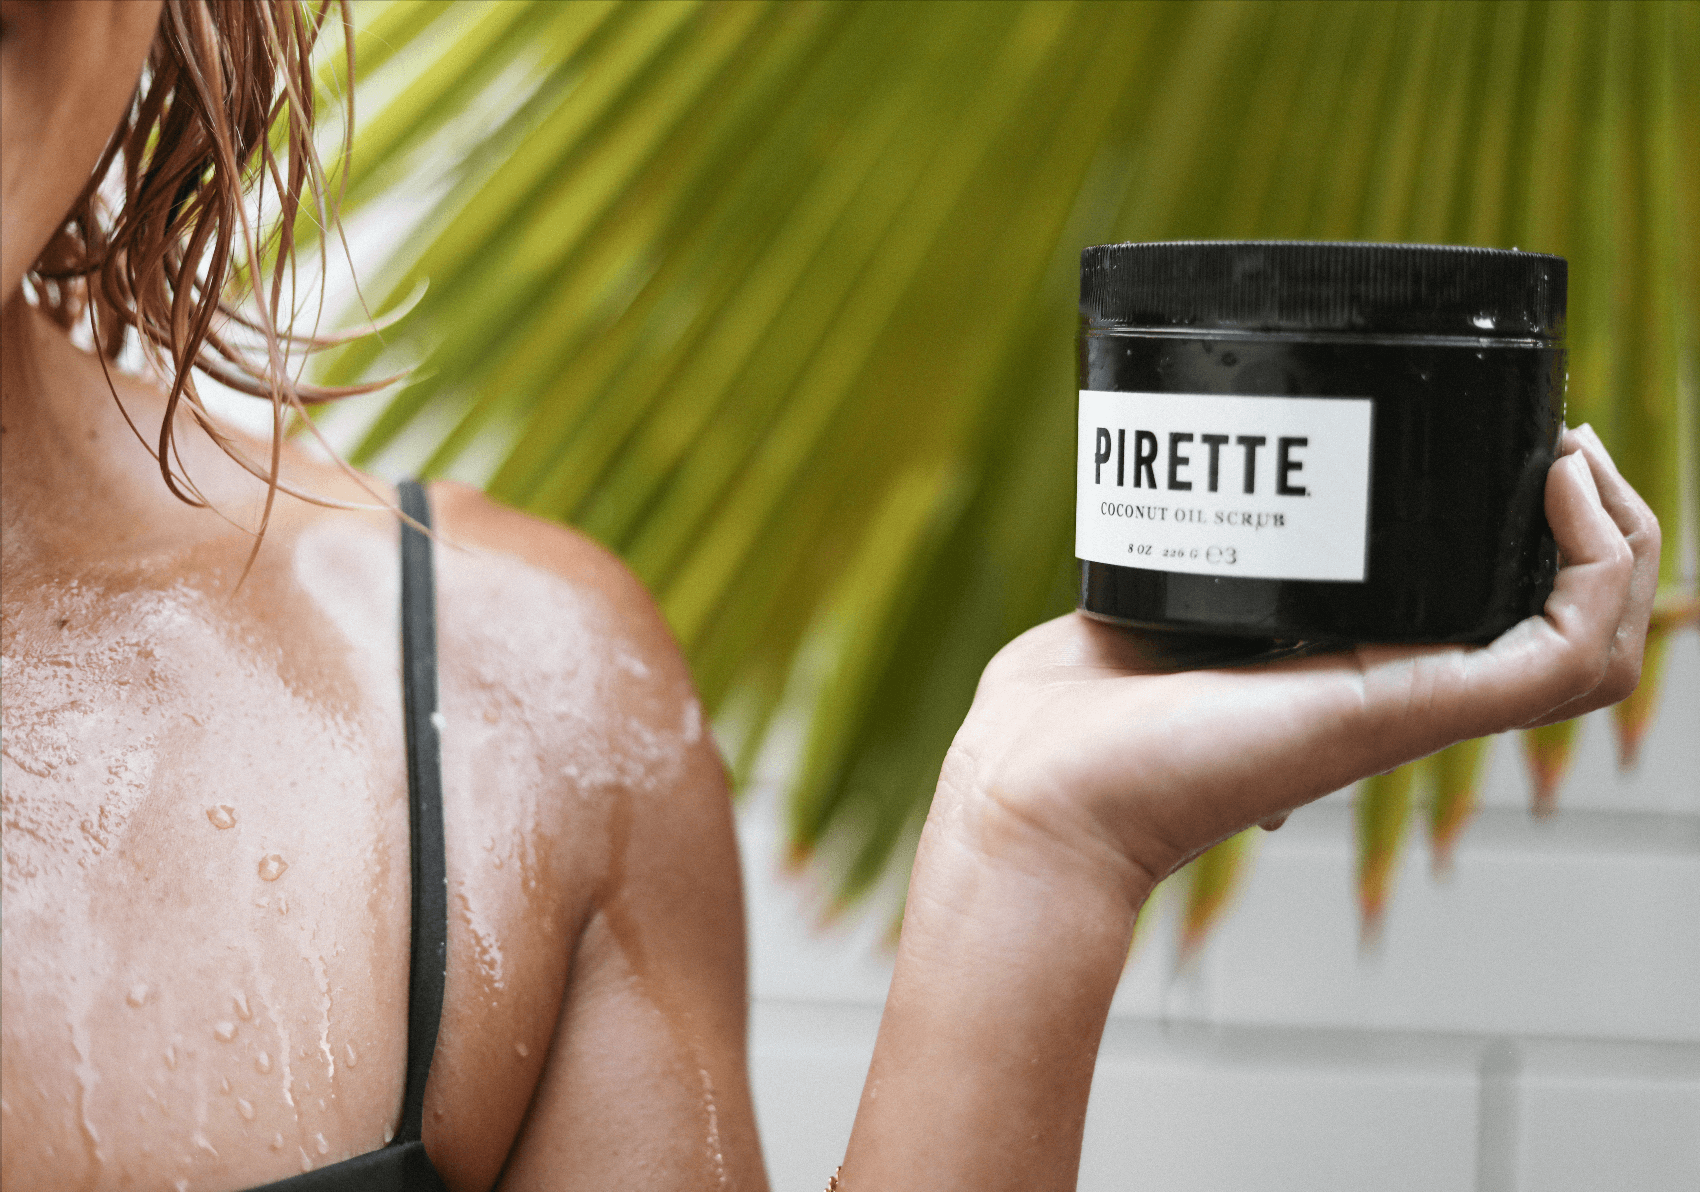 Pirette - Coconut Oil Scrub - Model